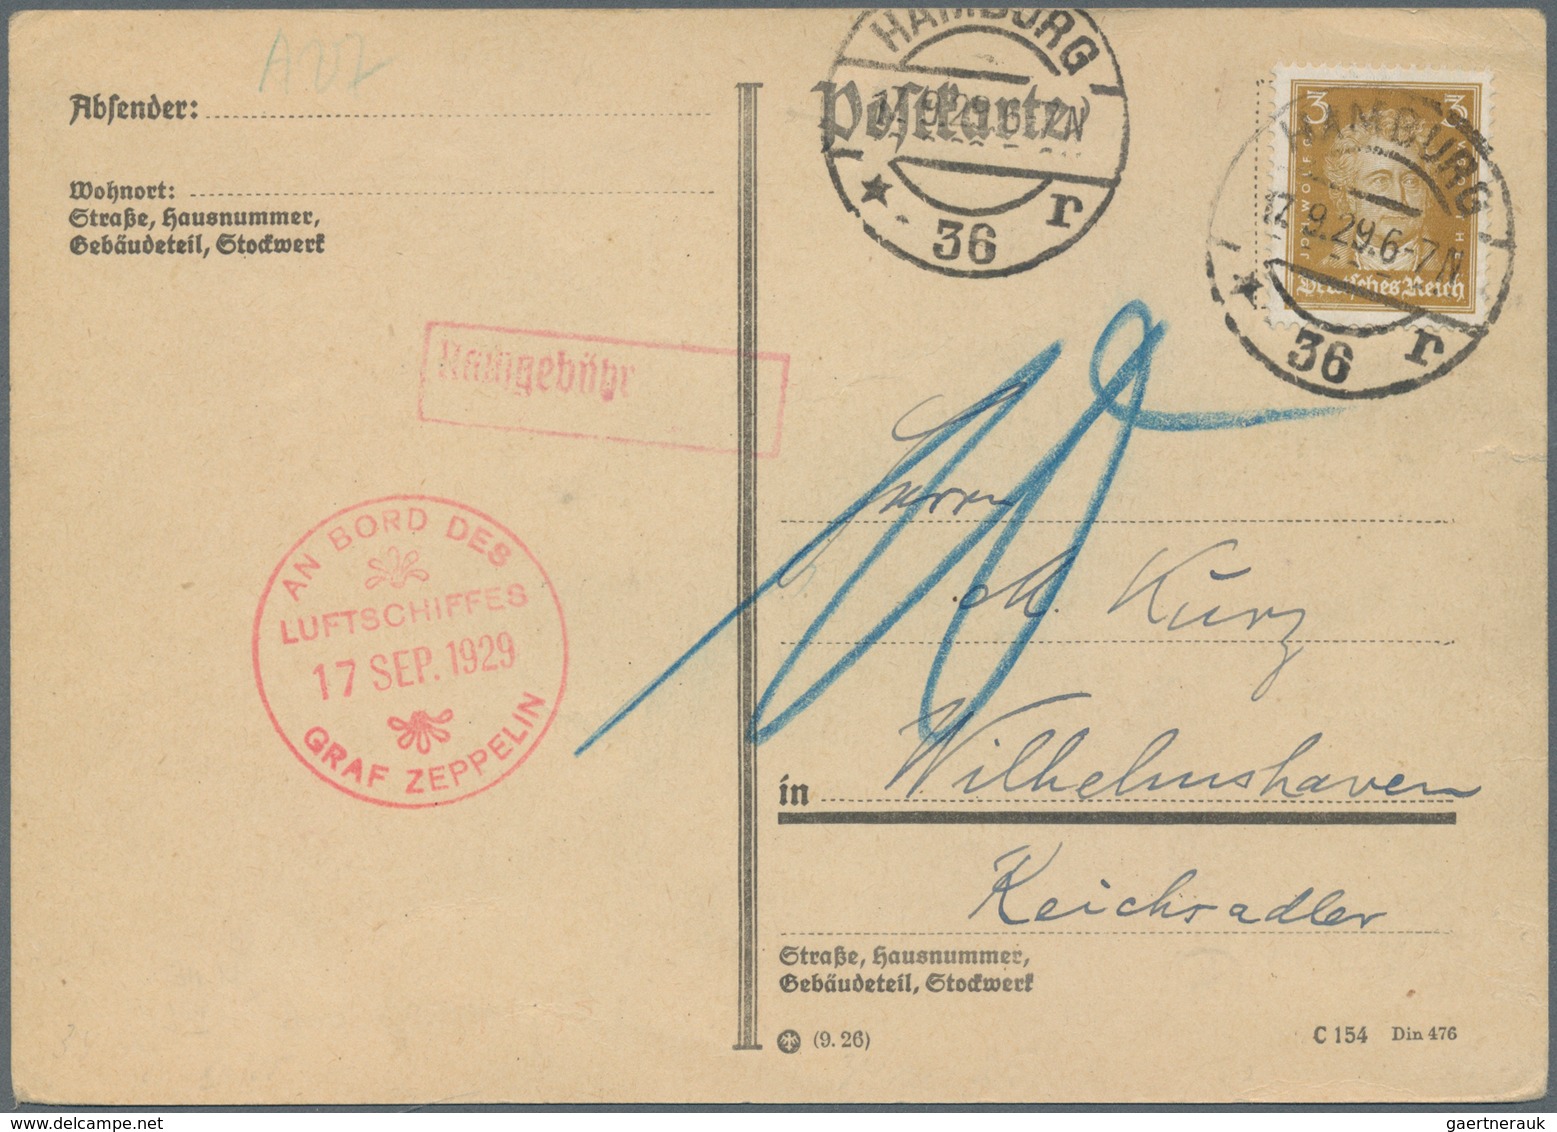 Zeppelinpost Deutschland: 1929. German Postcard Flown On The Graf Zeppelin LZ127 Airship's 1929 Deut - Airmail & Zeppelin